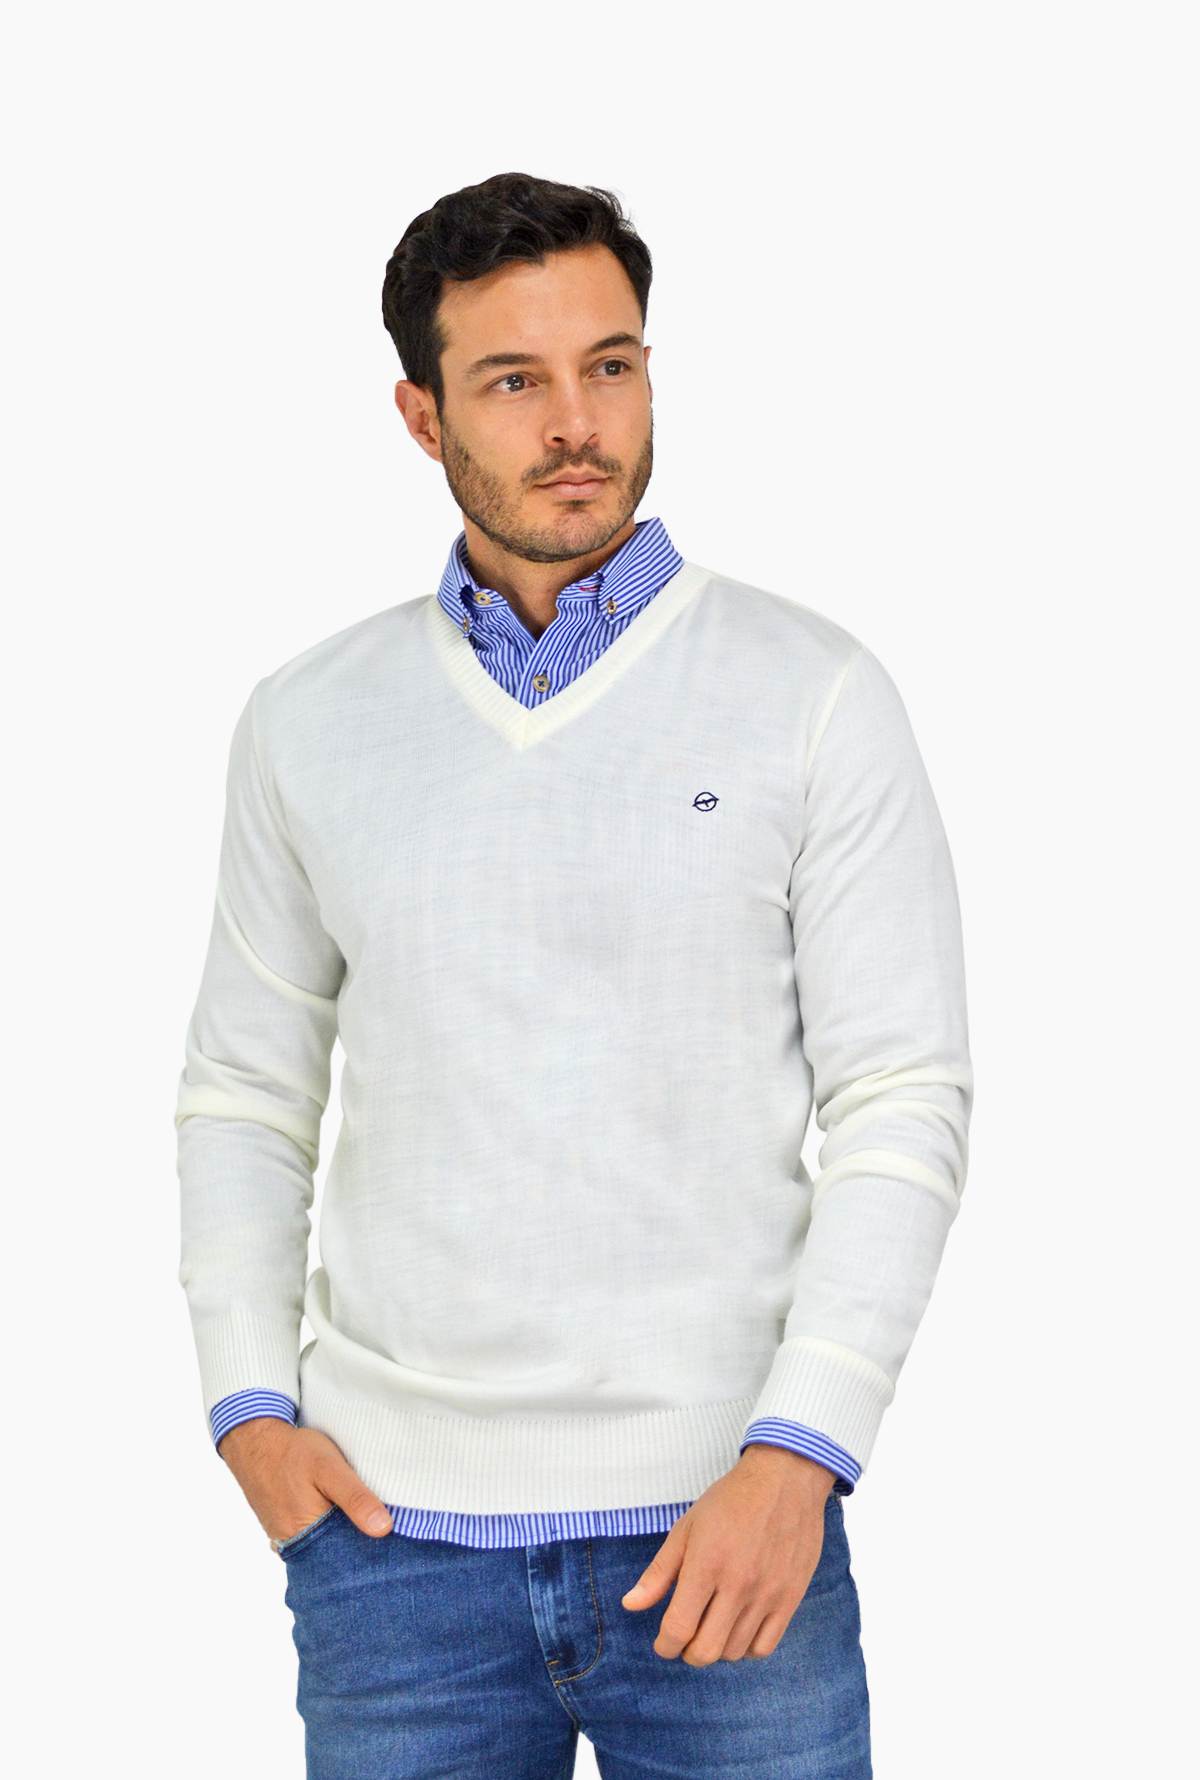 Sweater marfil básico cuello V, para hombre DMST07